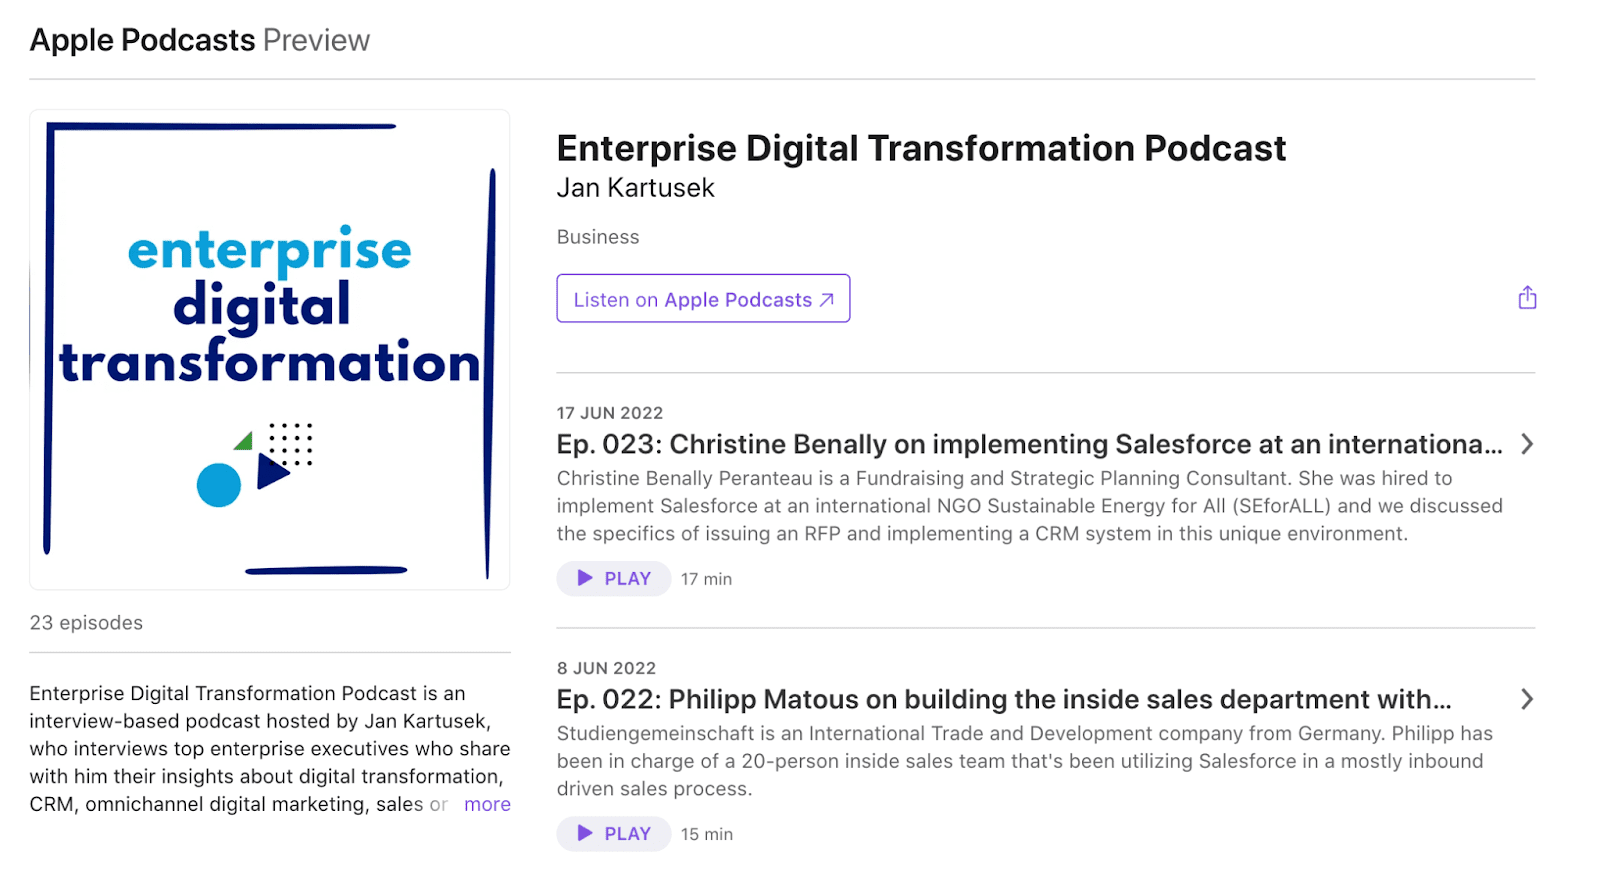 Enterprise Digital Transformation Podcast